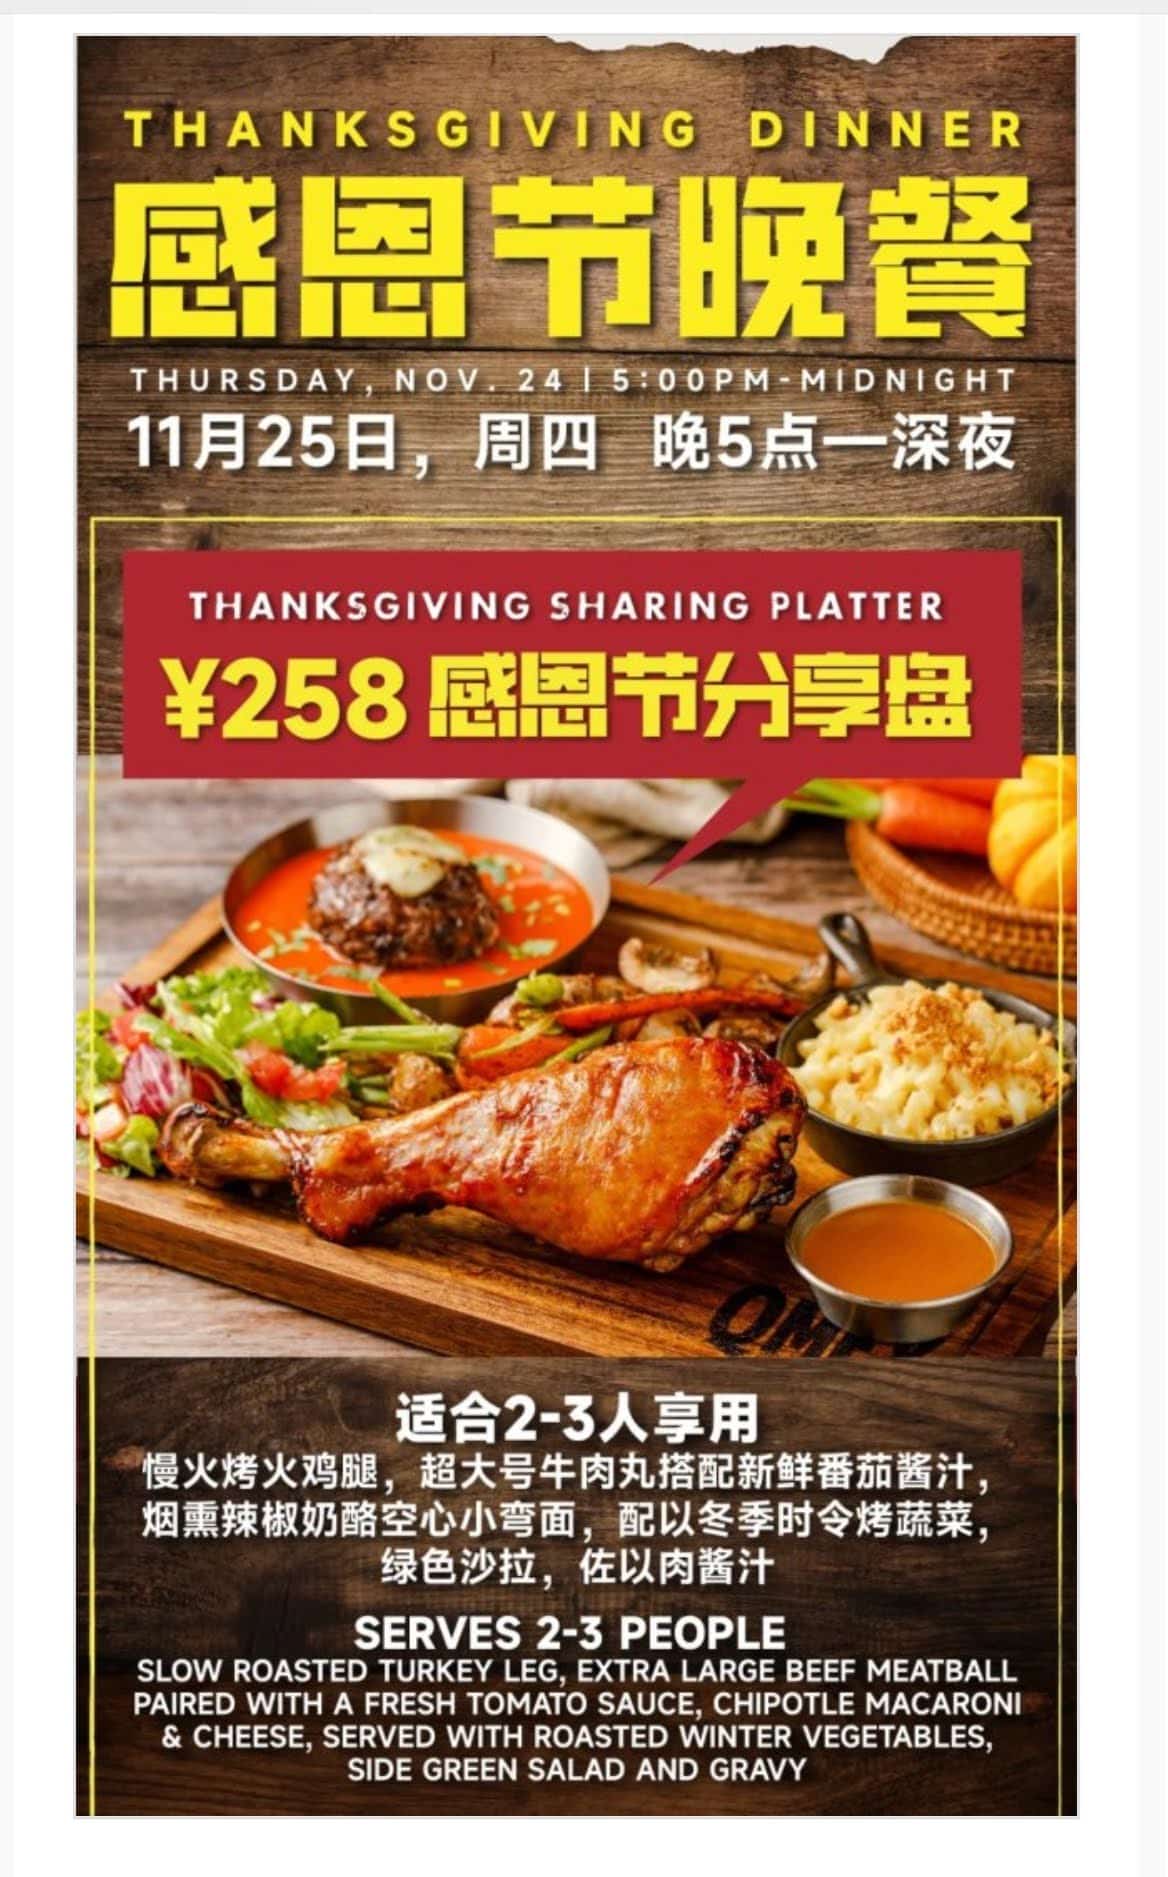 Thanksgiving Dinner ad